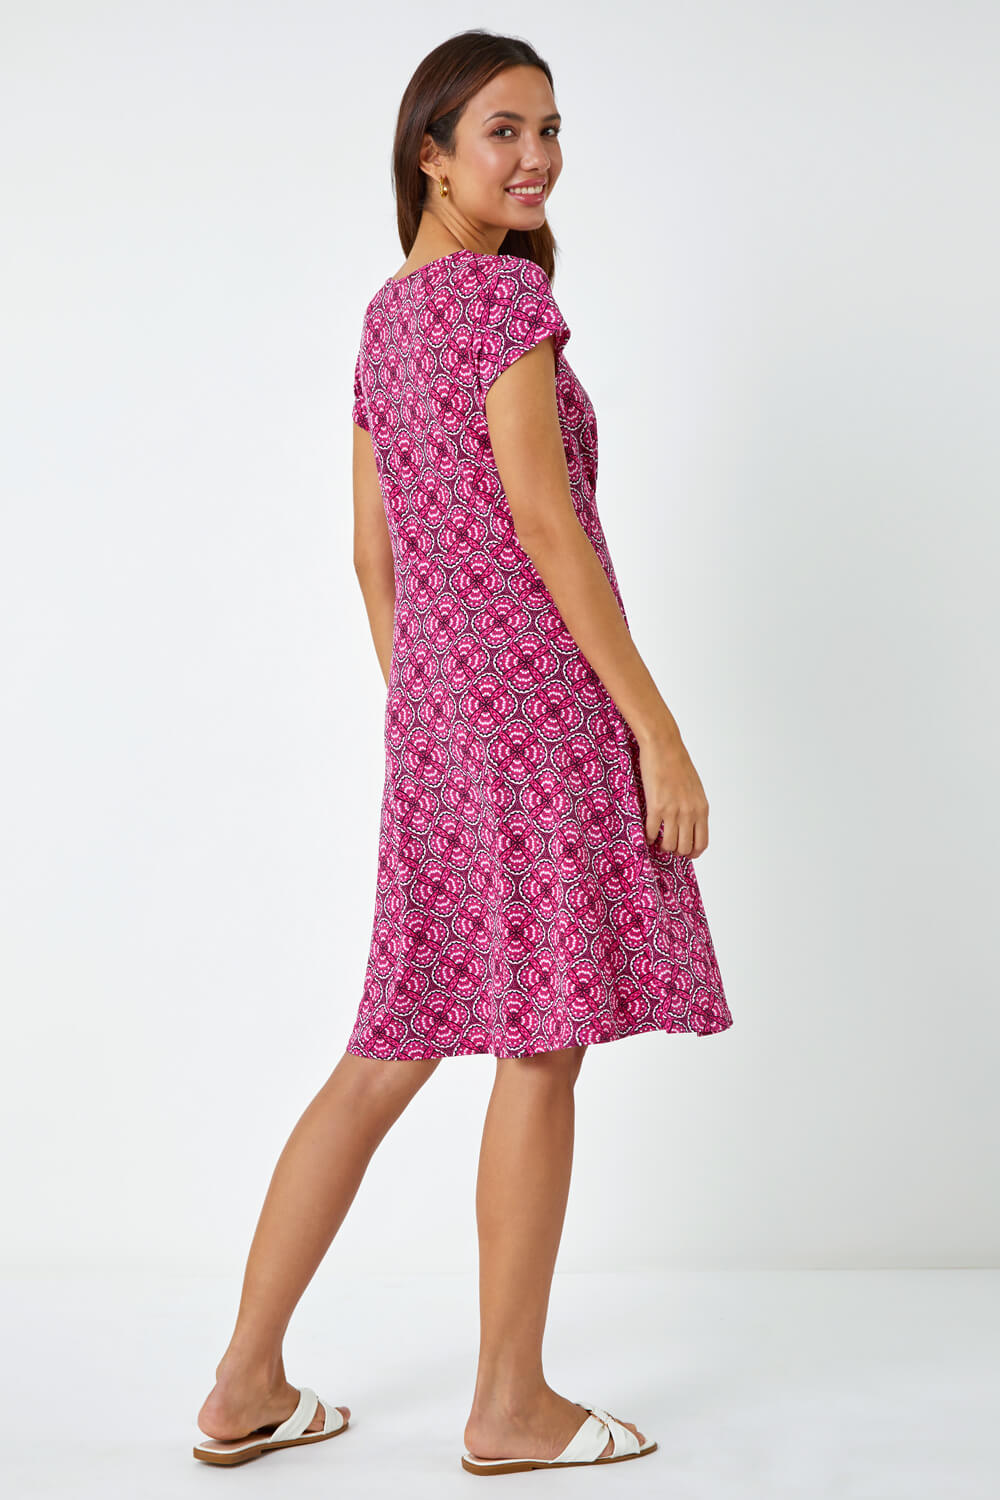 PINK Geo Print Textured Stretch Dress, Image 3 of 5